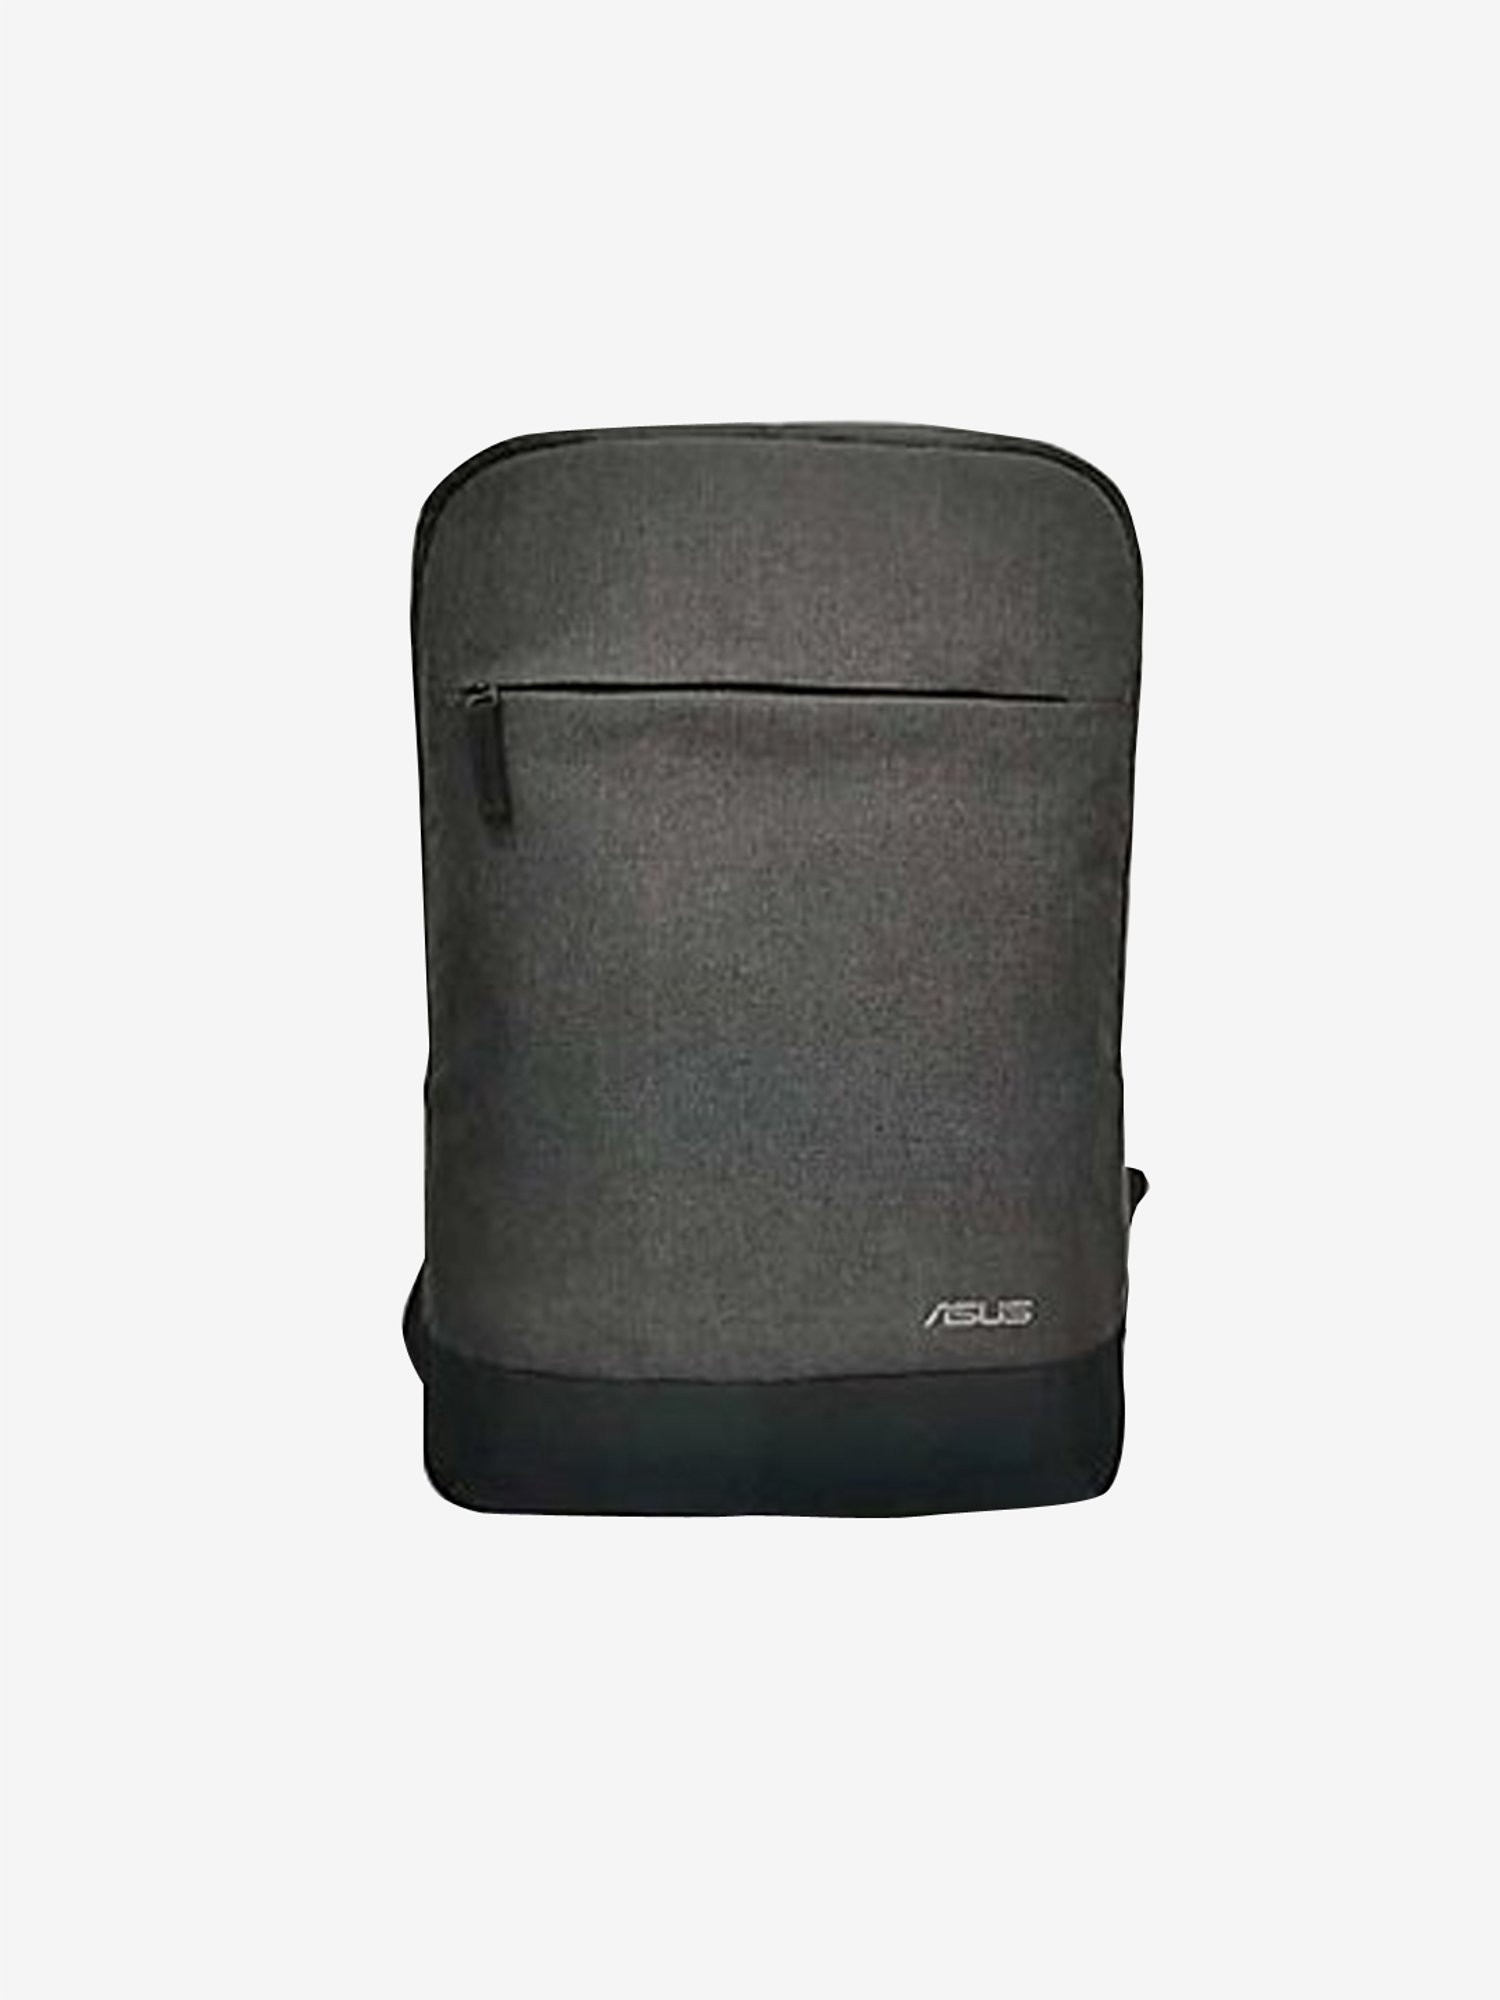 ESTONE Travel Gaming Laptop Backpack 17.3 Inch , Waterproof Computer Bag  Notebook Rucksack for 17.3 16-17.3 Inch Dell, Asus, Msi,Hp Gaming Laptops  (Gray) - Newegg.com